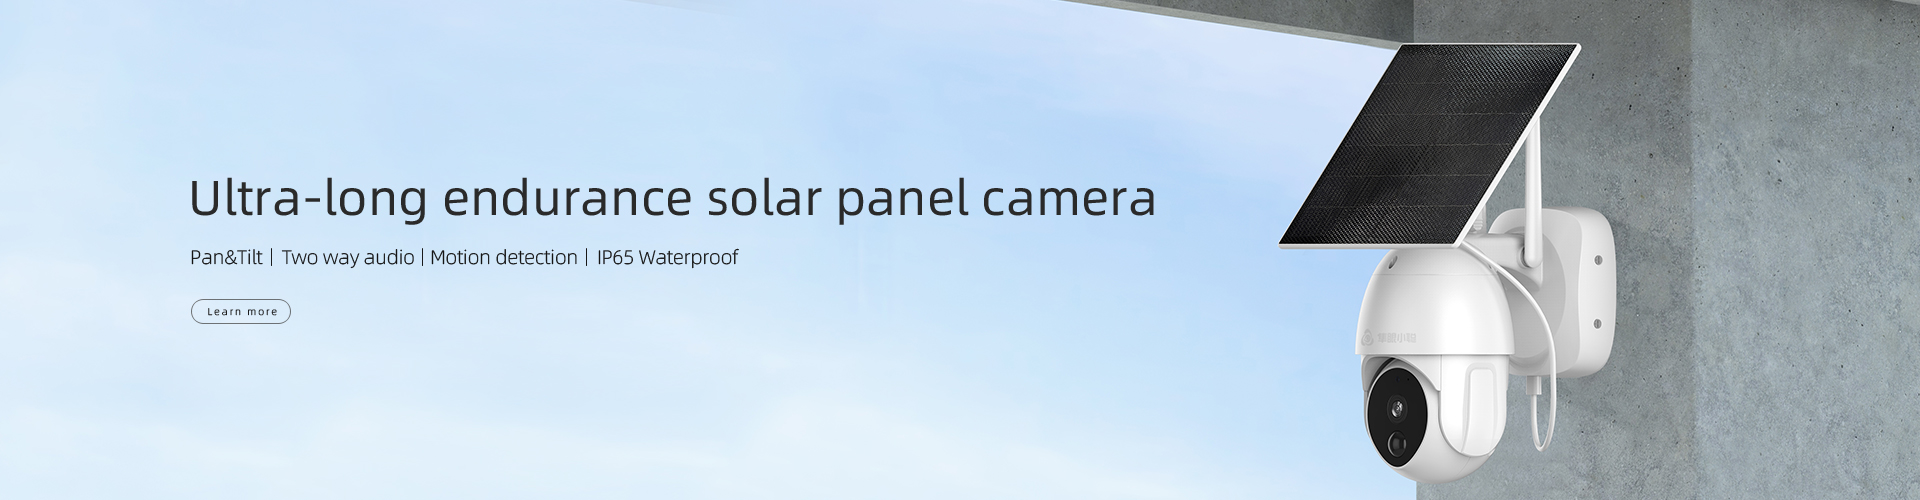 ultra loog endurance solar panel camera